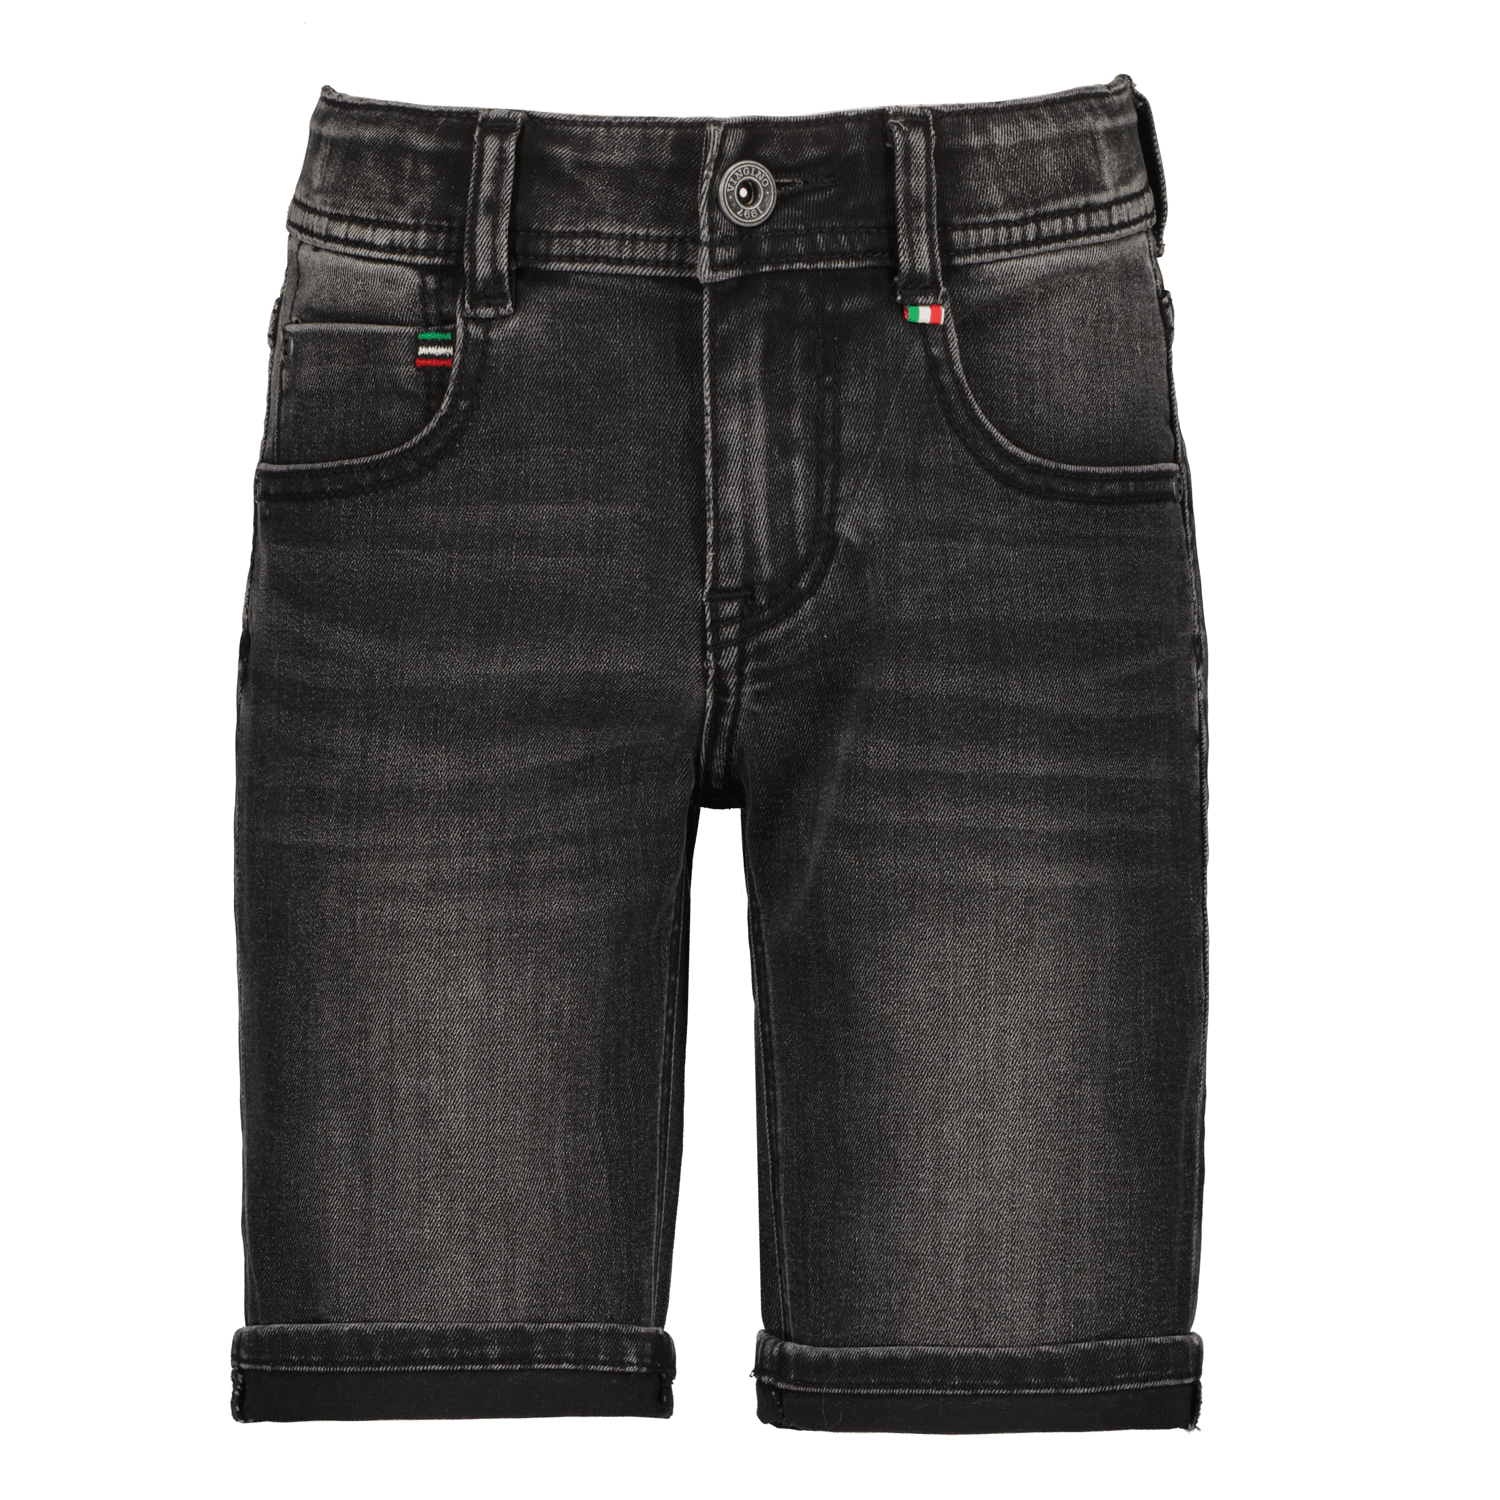 VINGINO denim short Curzio black vintage Korte broek Zwart Jongens Stretchdenim 146